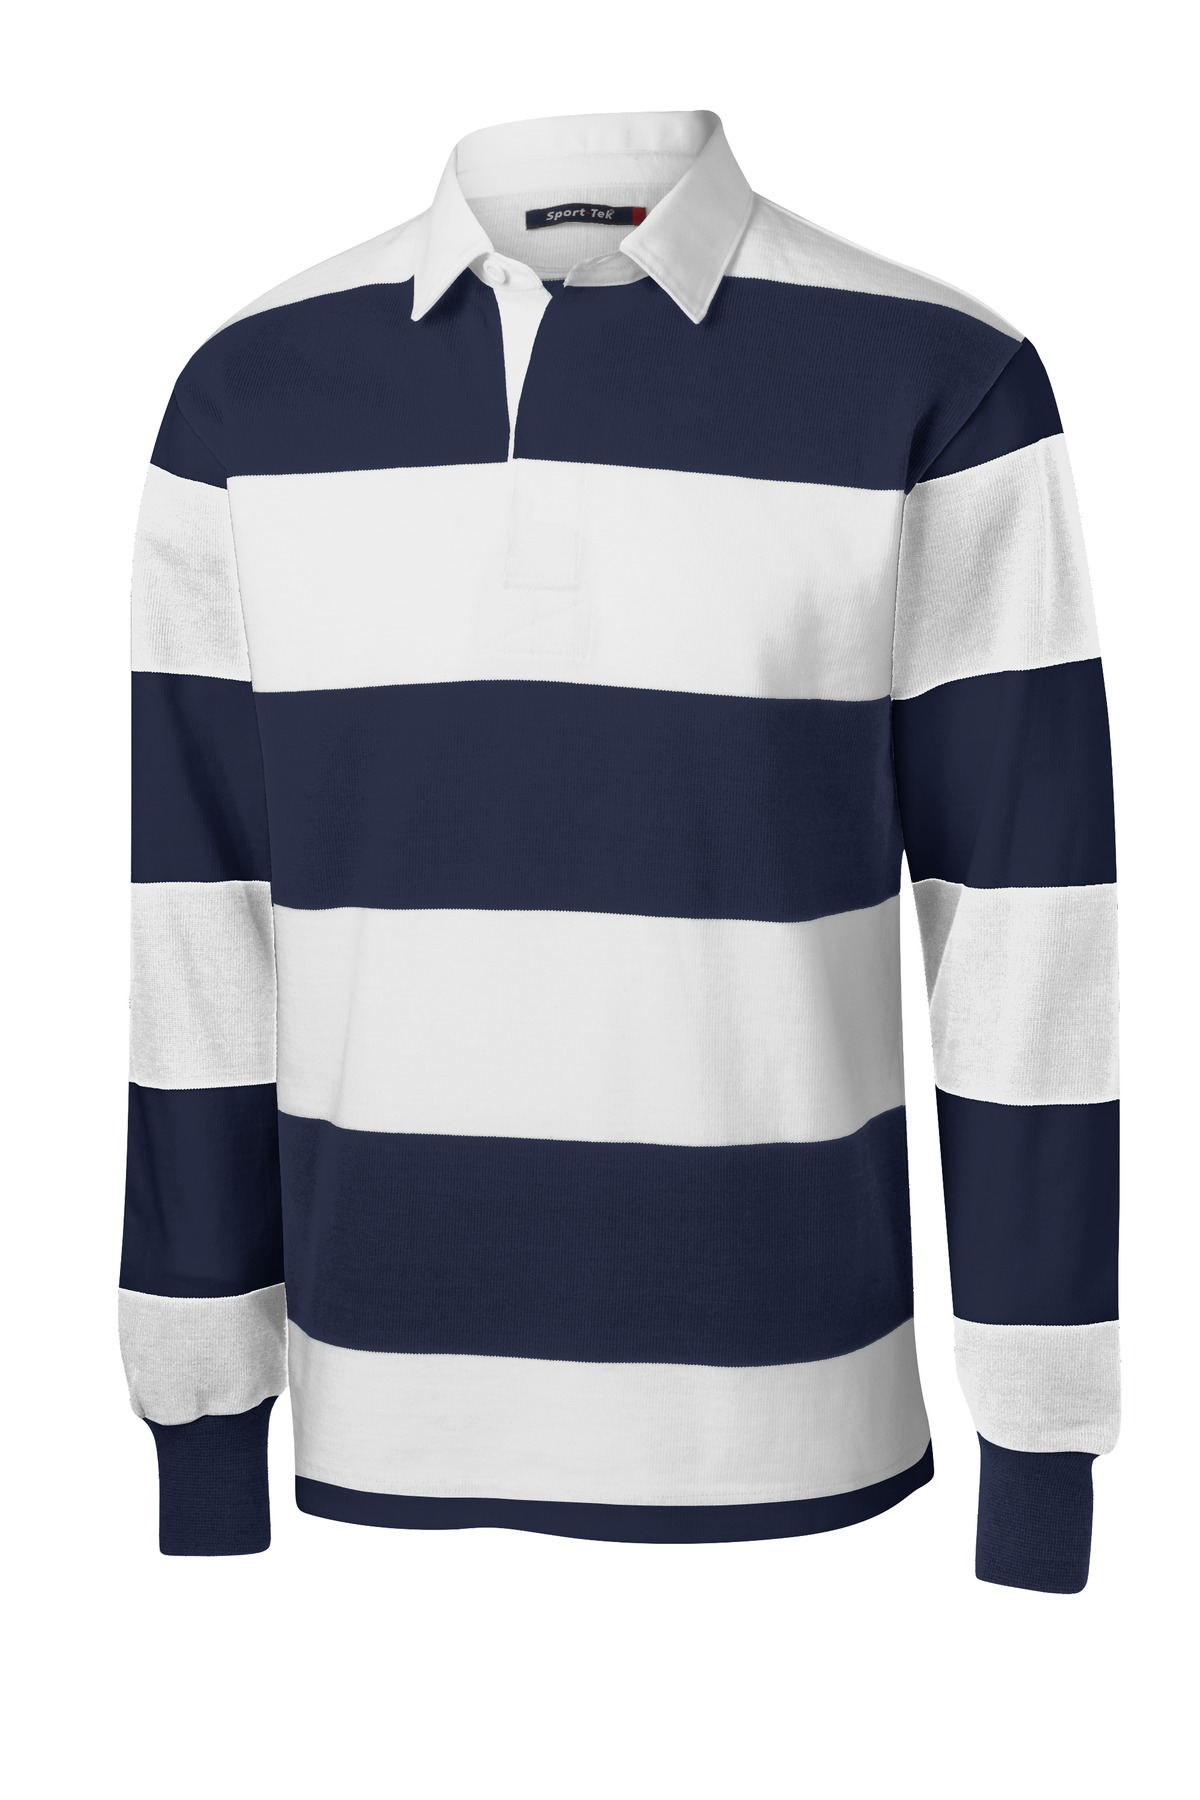 Sport Tek Adult Male Men Stripe Long Sleeves Rugby Polo True Navy/Wht Large - image 5 of 6